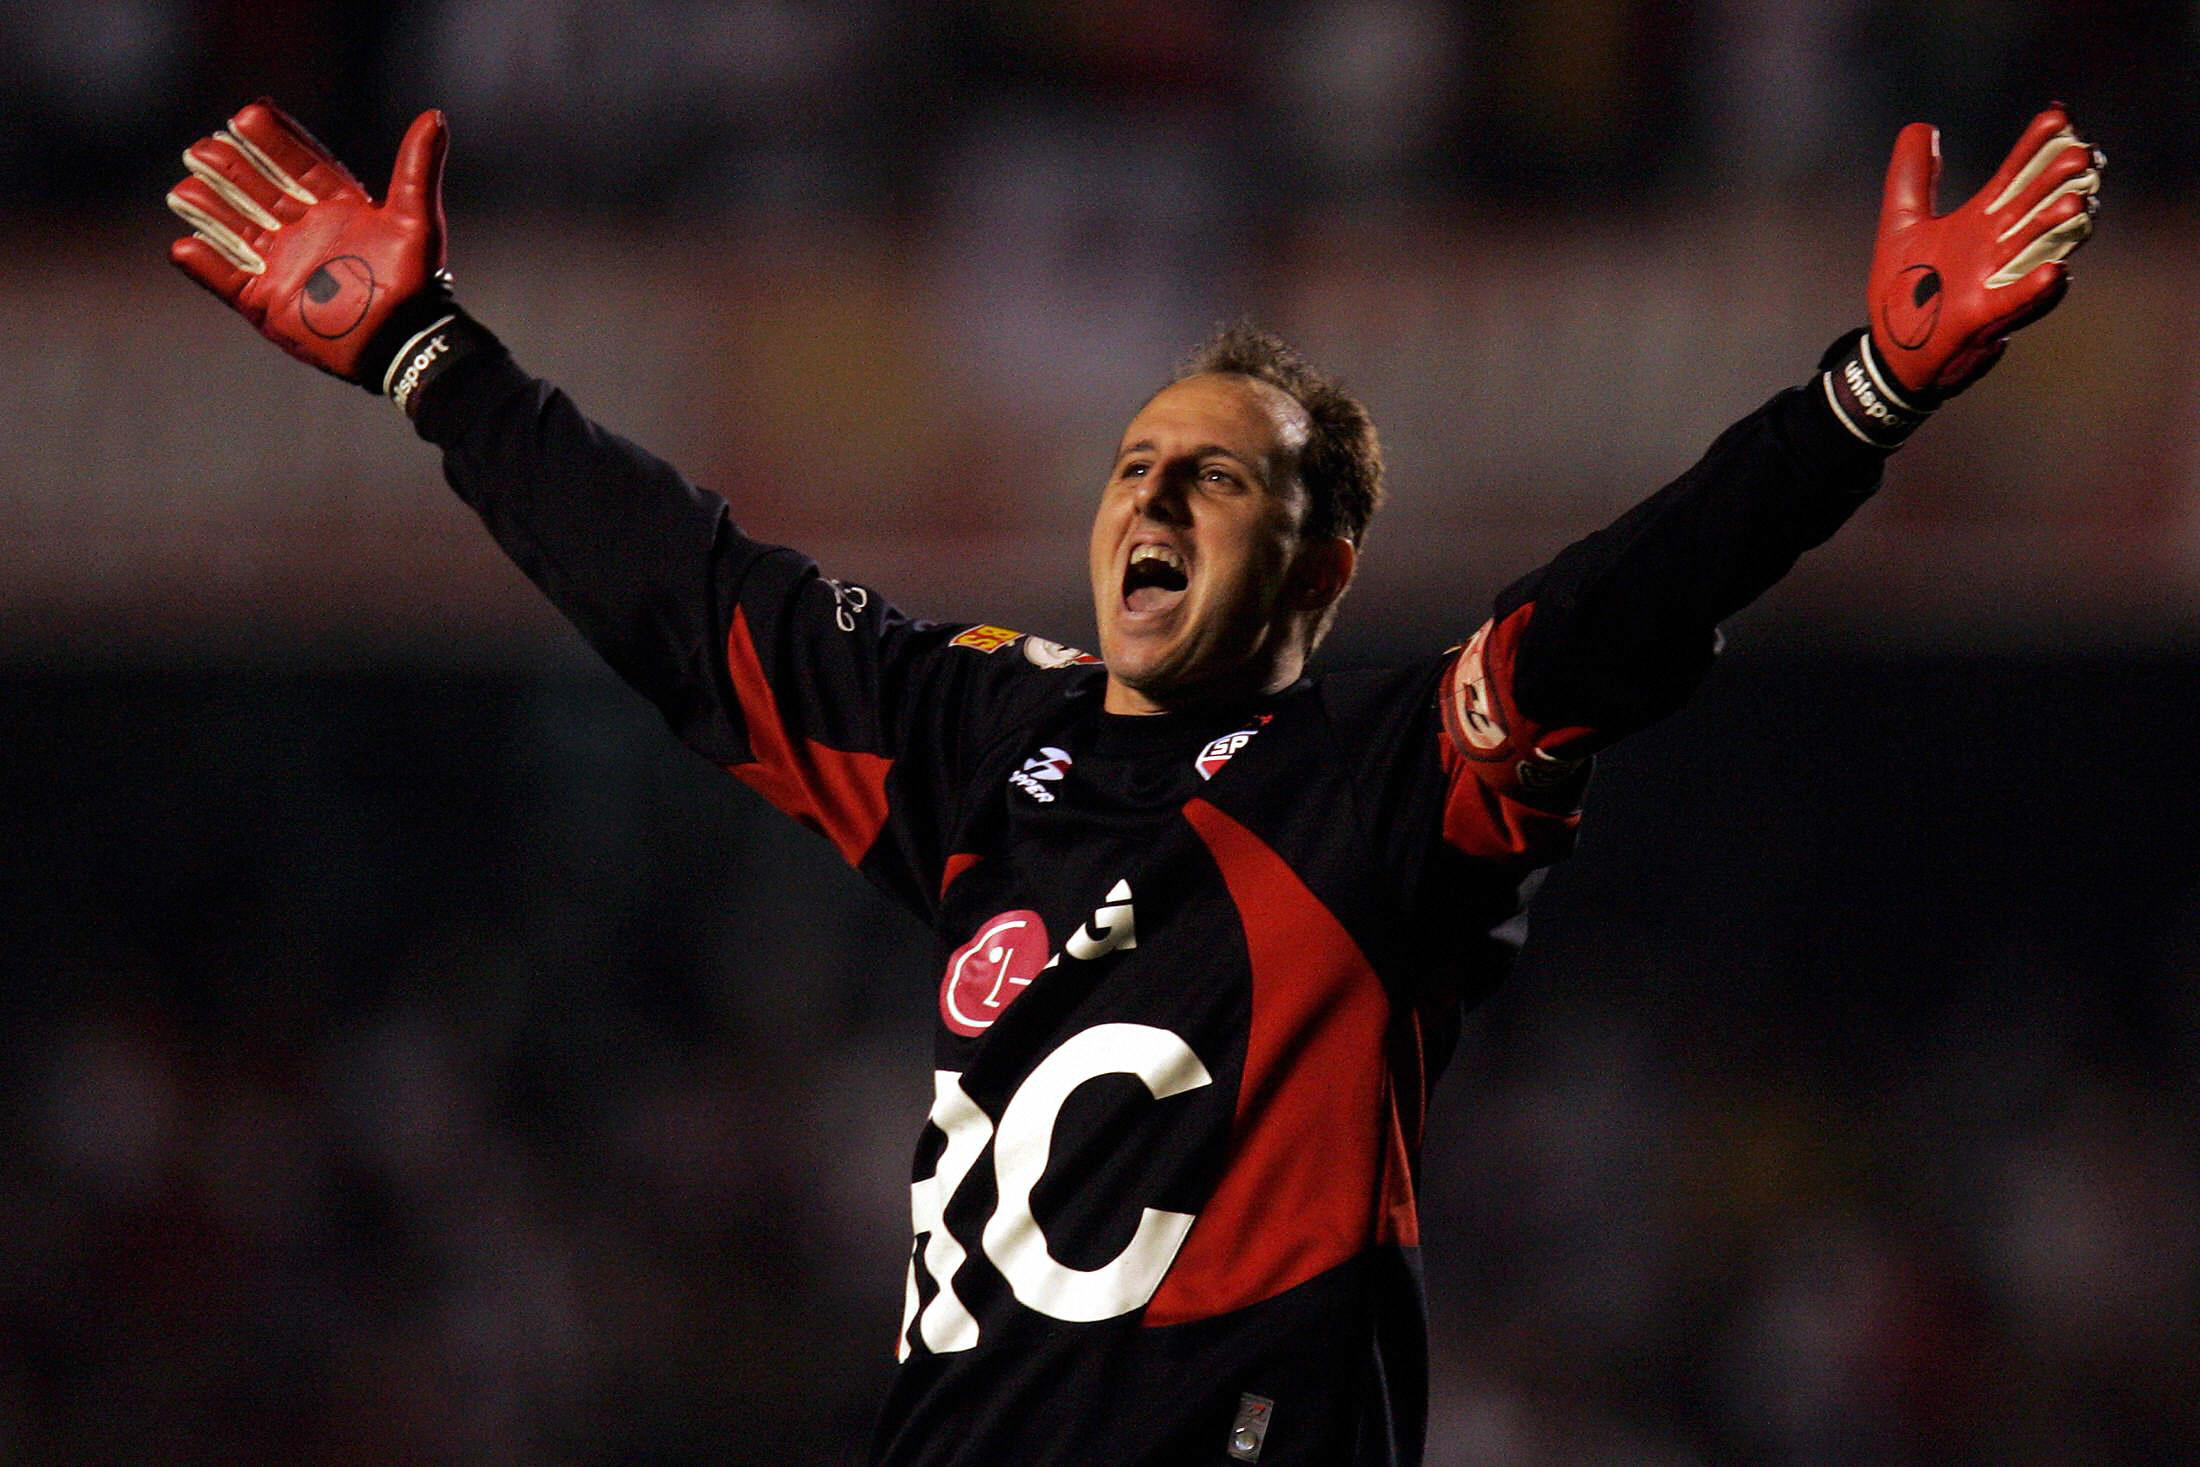 Sao Paulo goalkeeper Rogerio Ceni celebrates a goal for his side in the Copa Libertadores final in 2005.